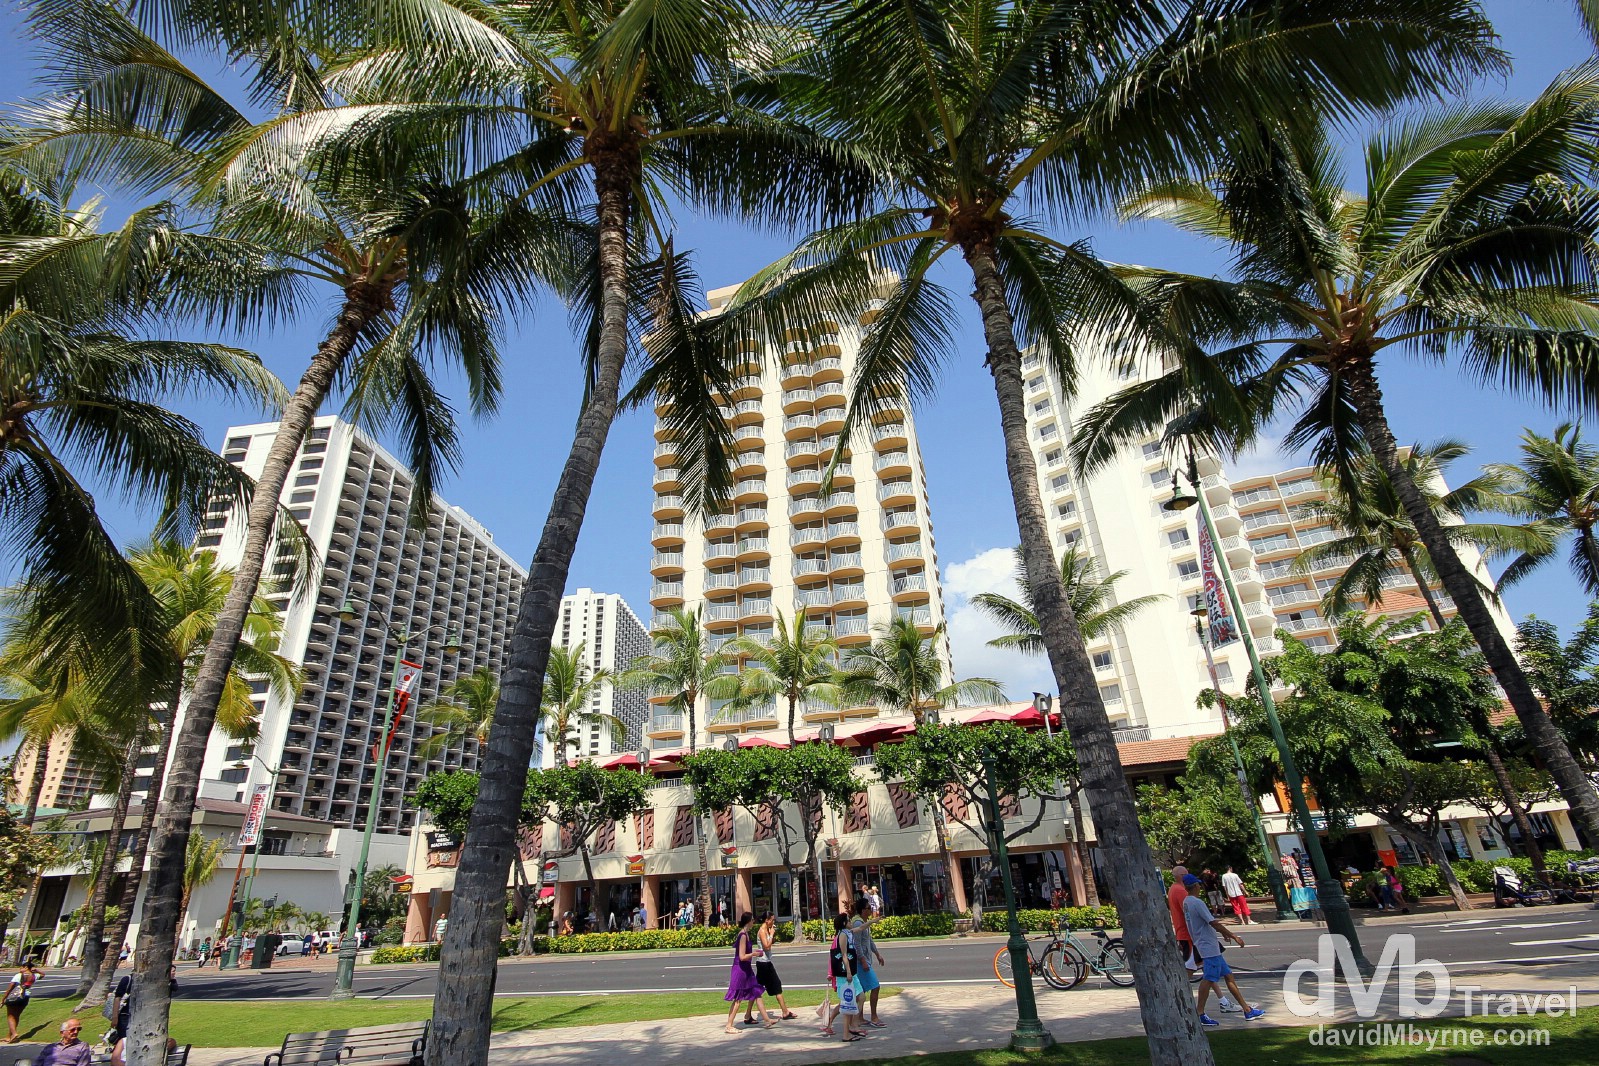 Palm trees & tower blocks on Kalakaua Avenue fronting Waikiki Beach on Oahu, Hawaii, USA. March 8th 2013.